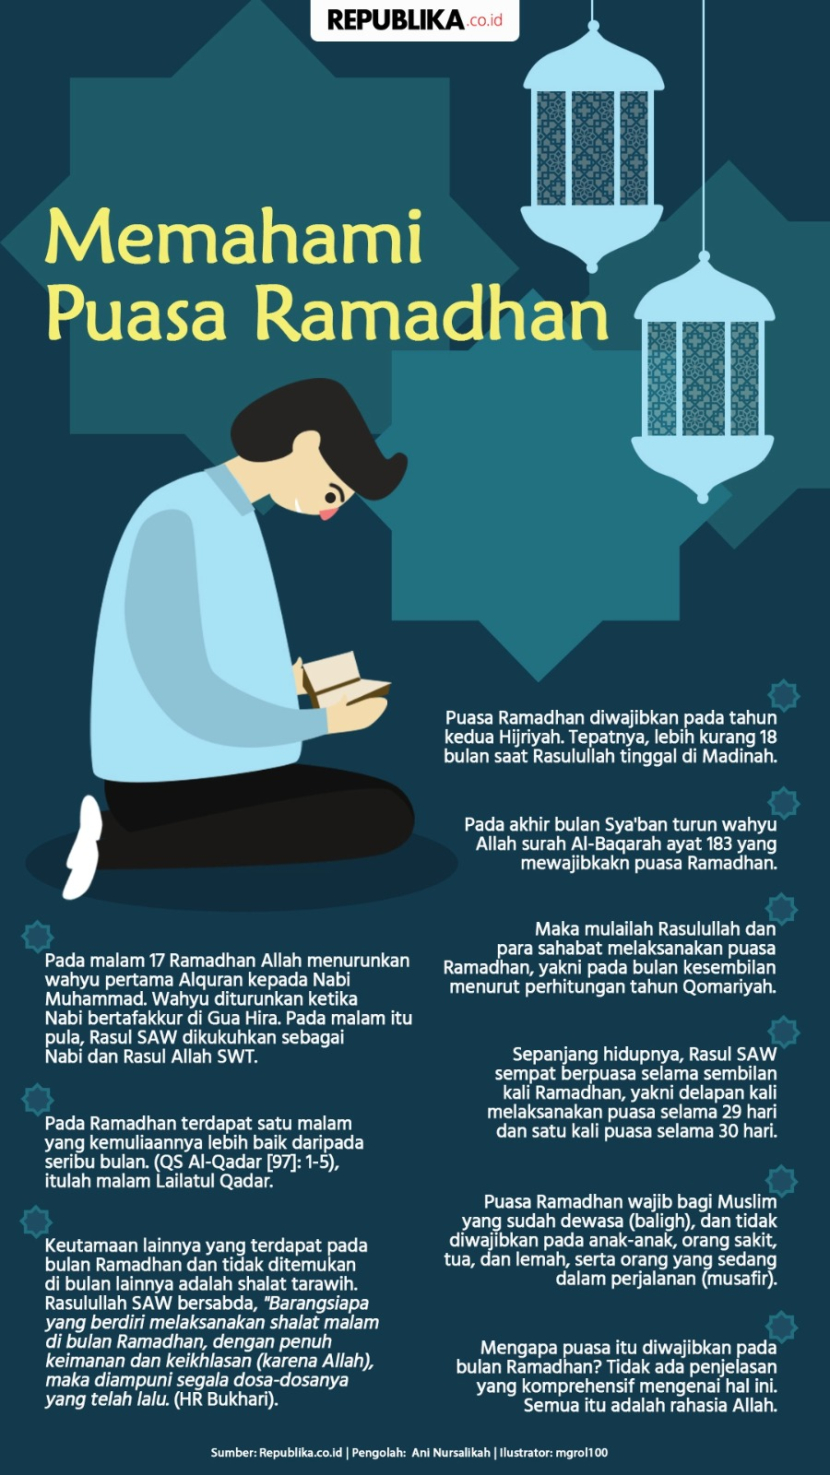 Memahami Puasa Ramadhan. Dok: Republika